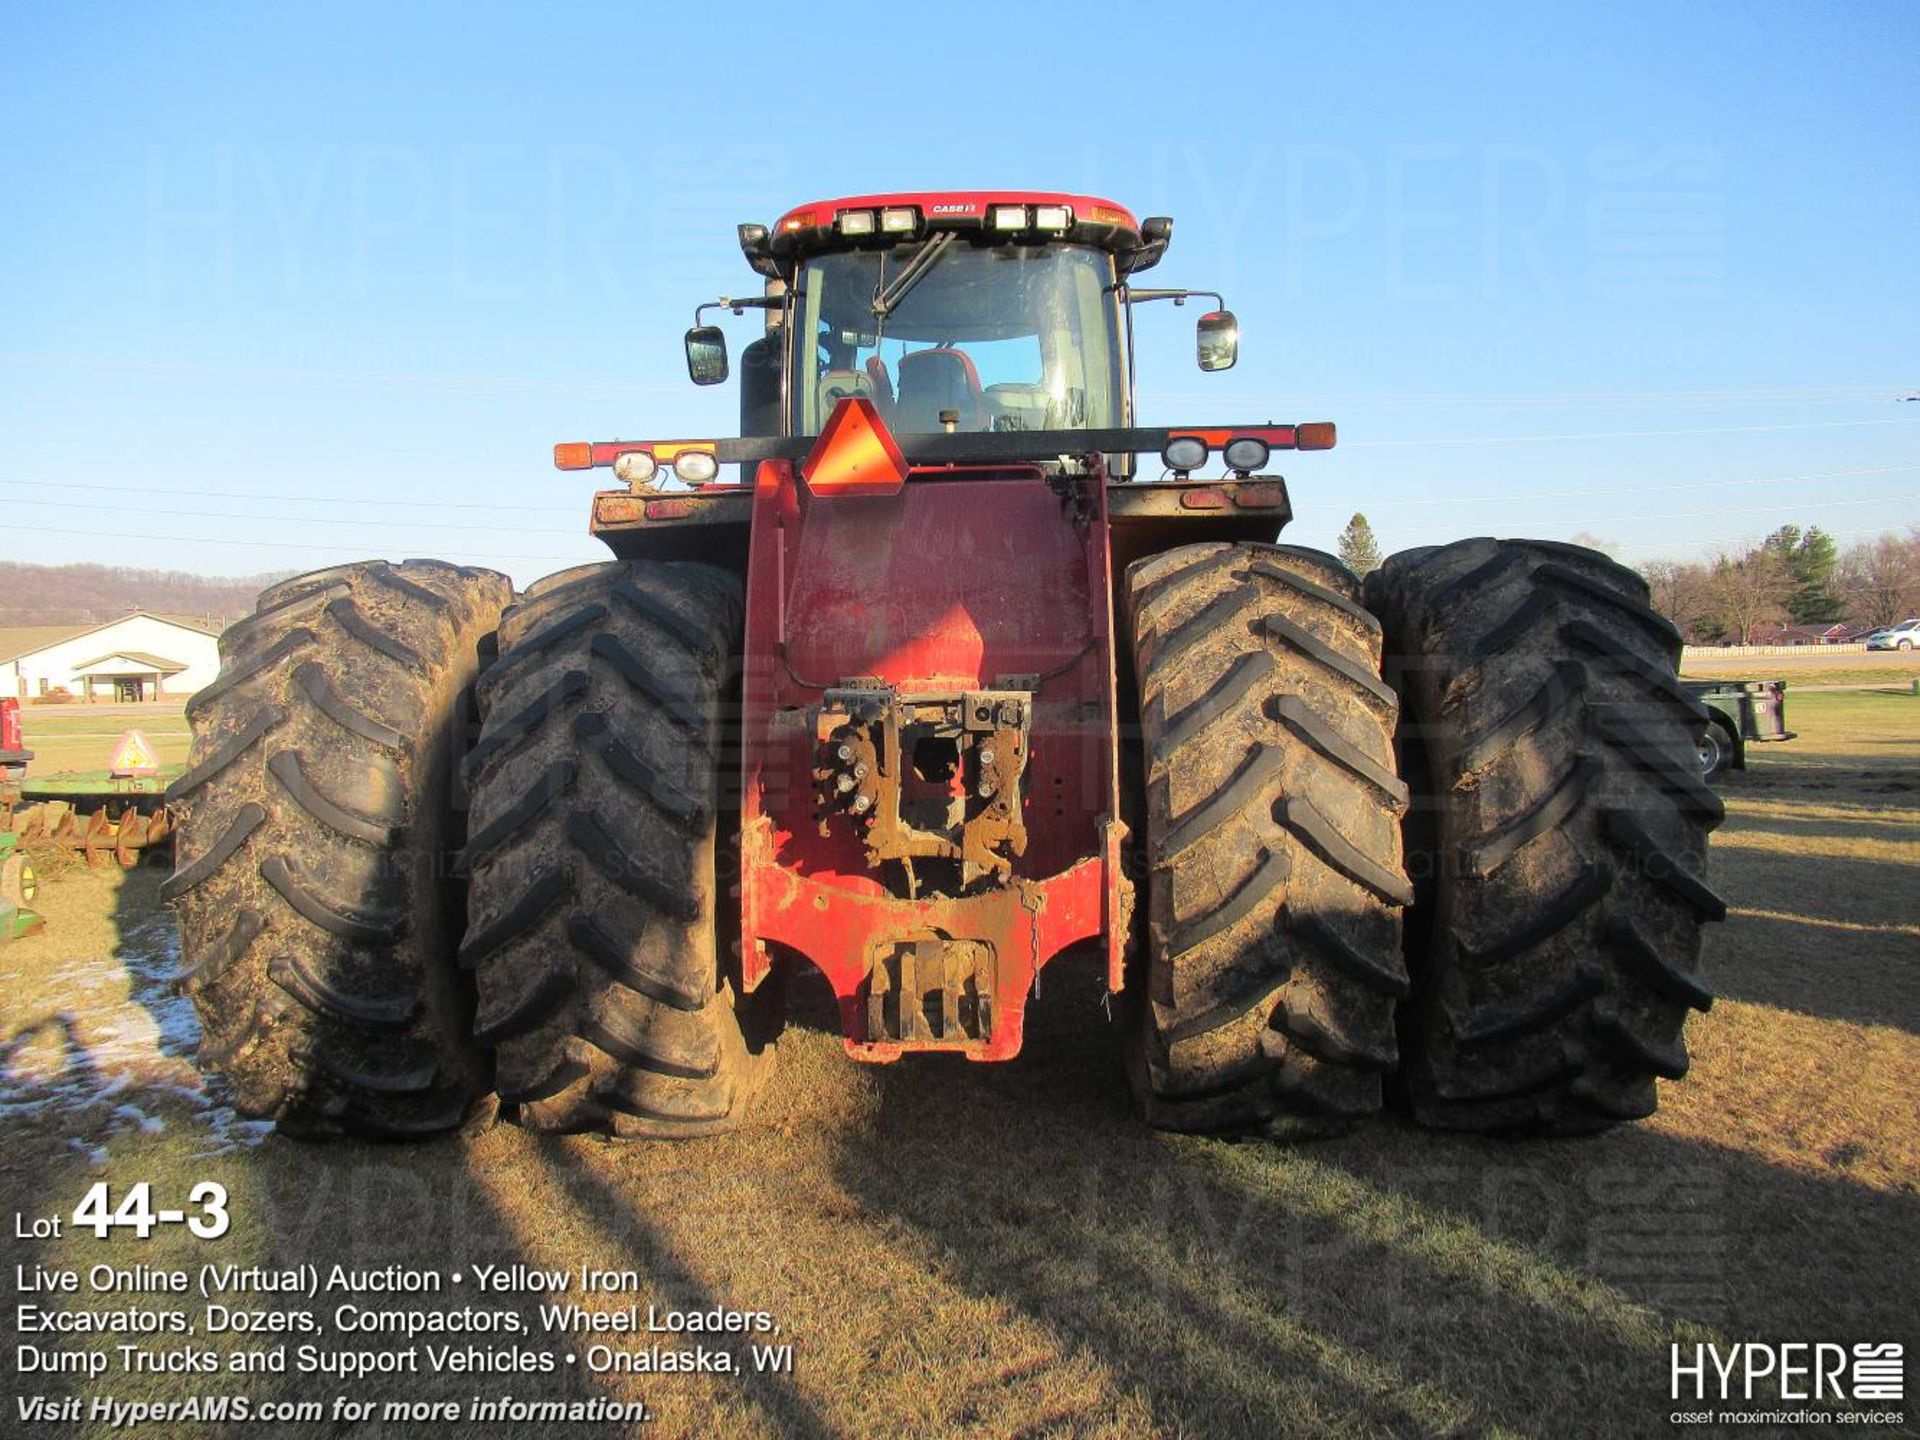 2013 Case IH Steiger 550HD ag tractor - Image 3 of 19